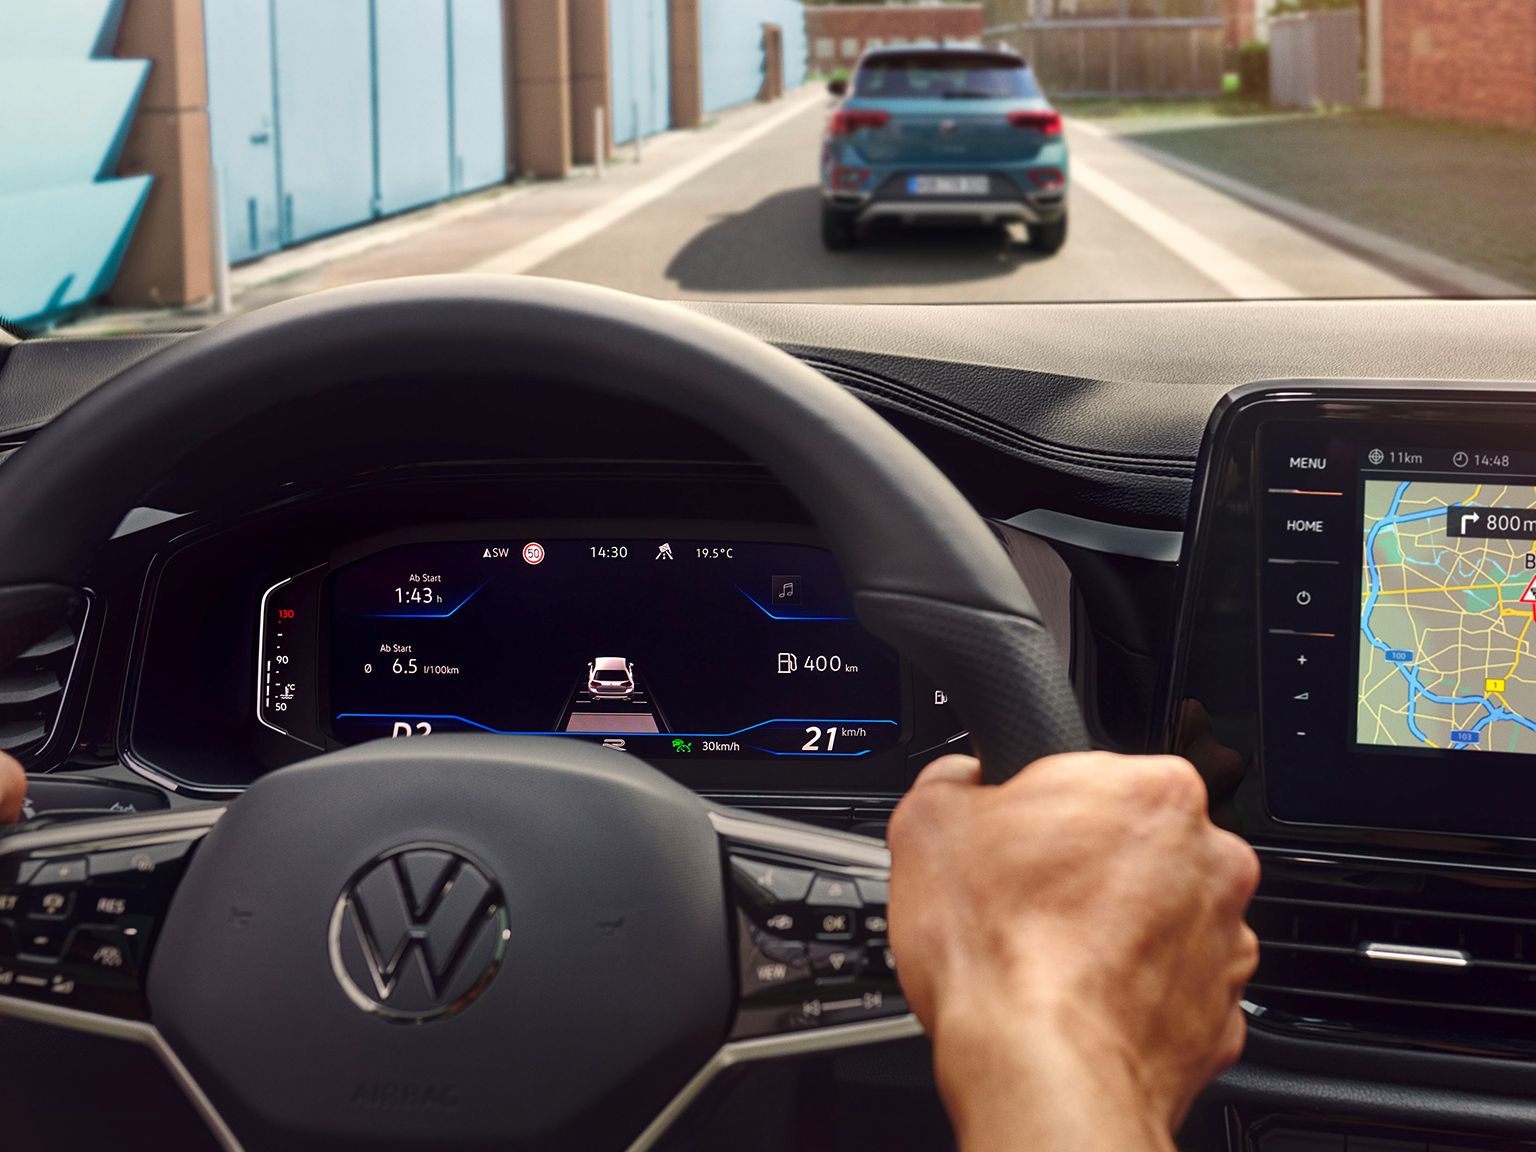 VW T-Roc Interieur, Detailansicht des Digital Cockpits mit aktiviertem Travel Assist